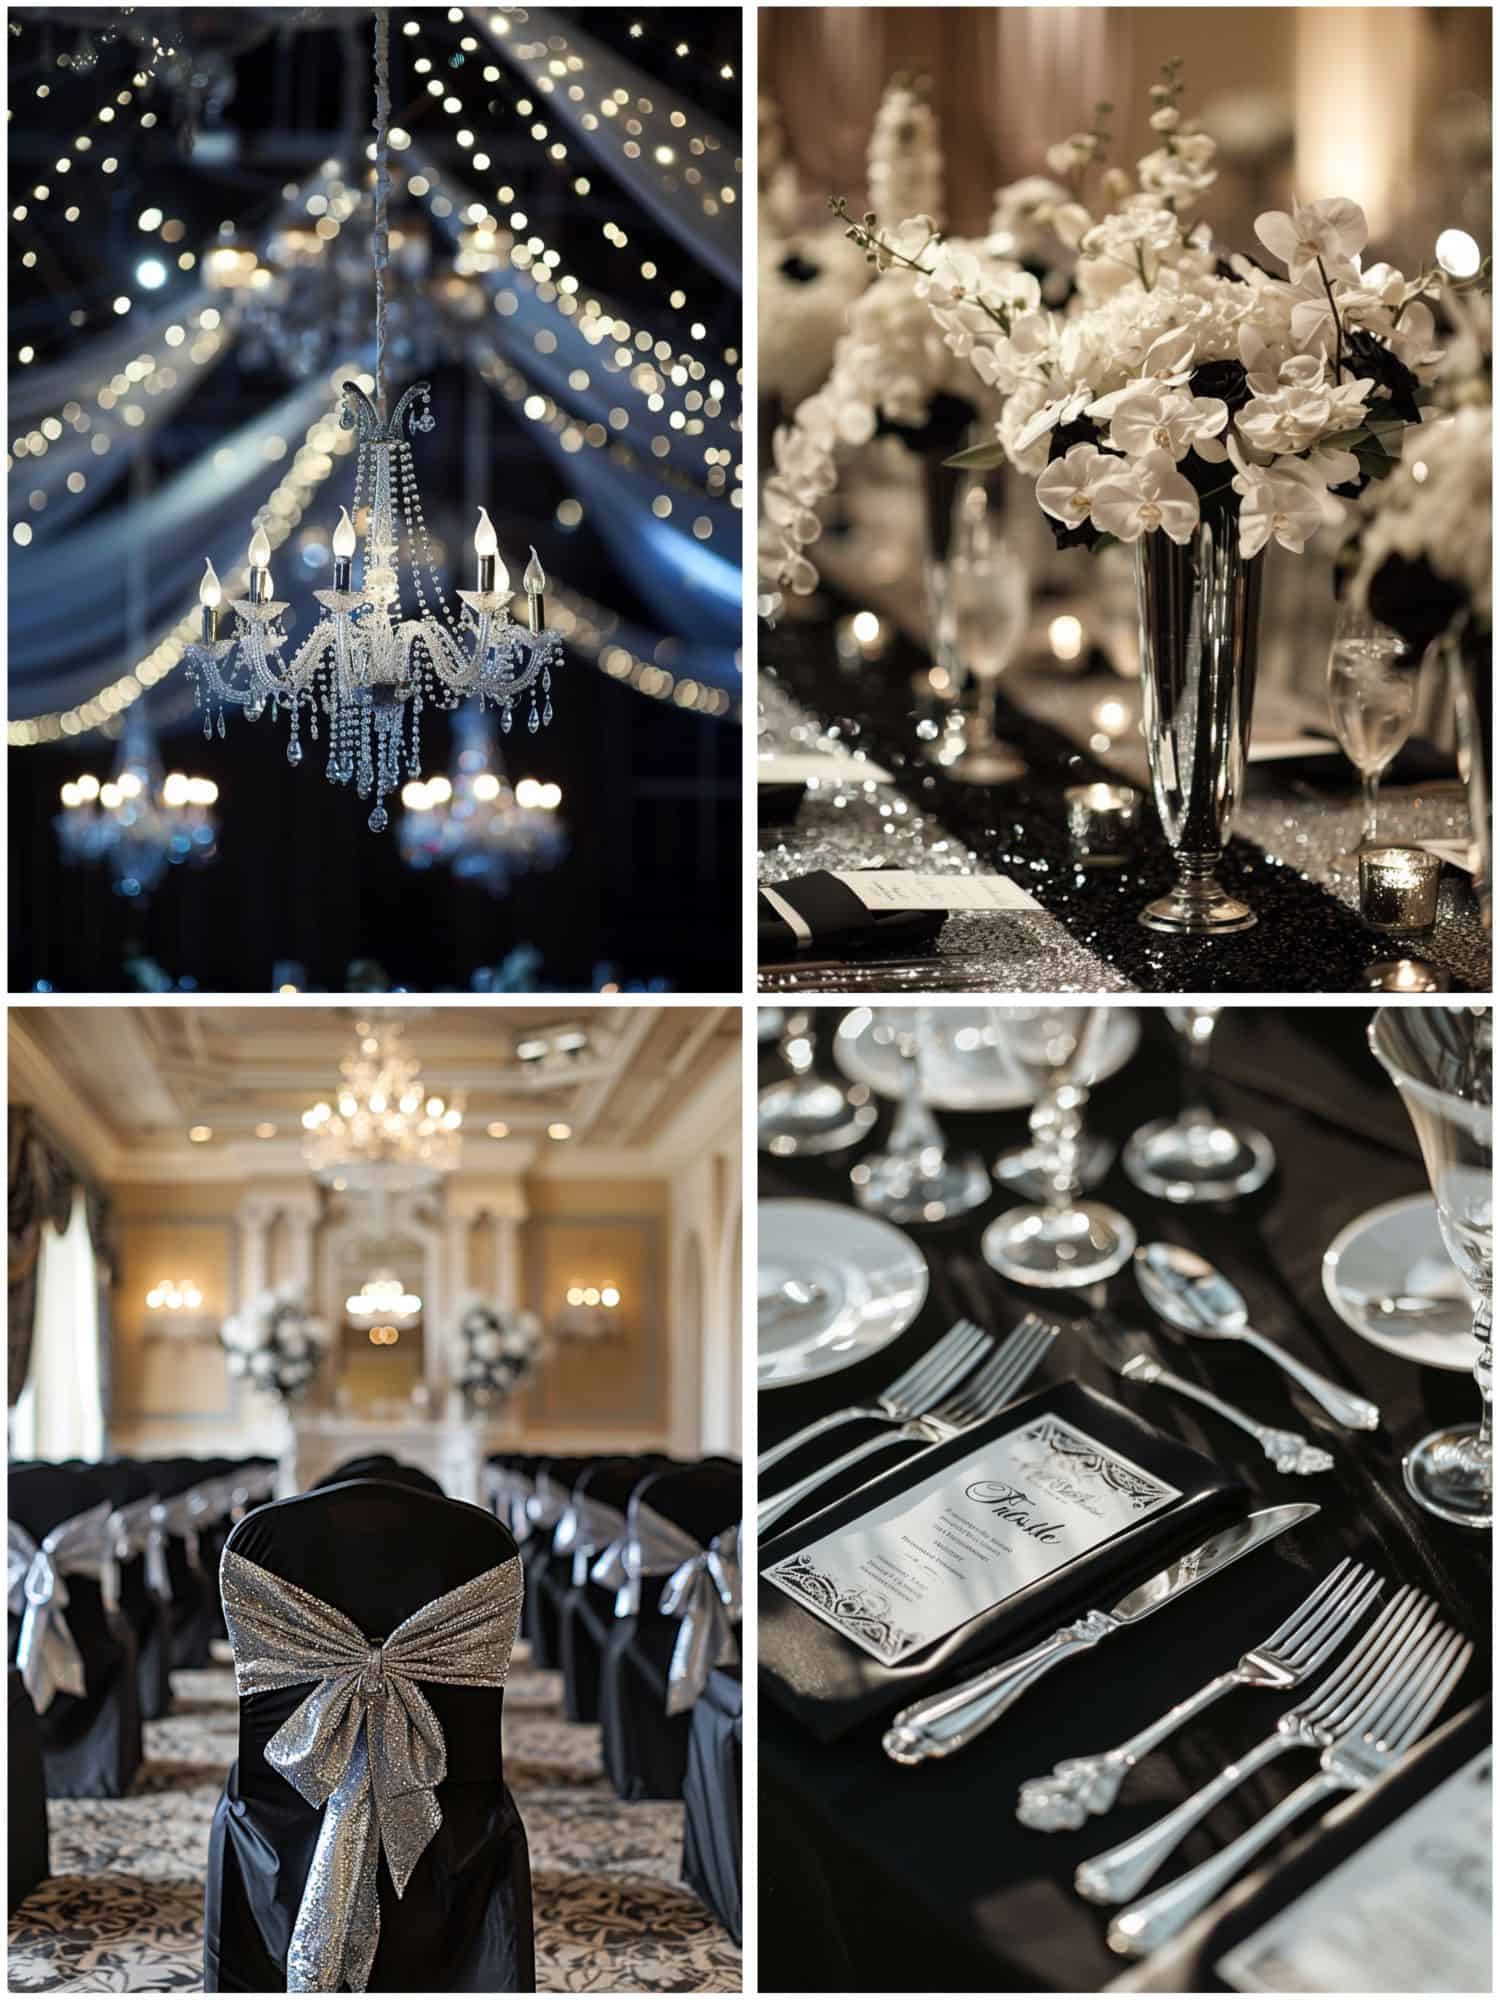 elegant decor in black and silver